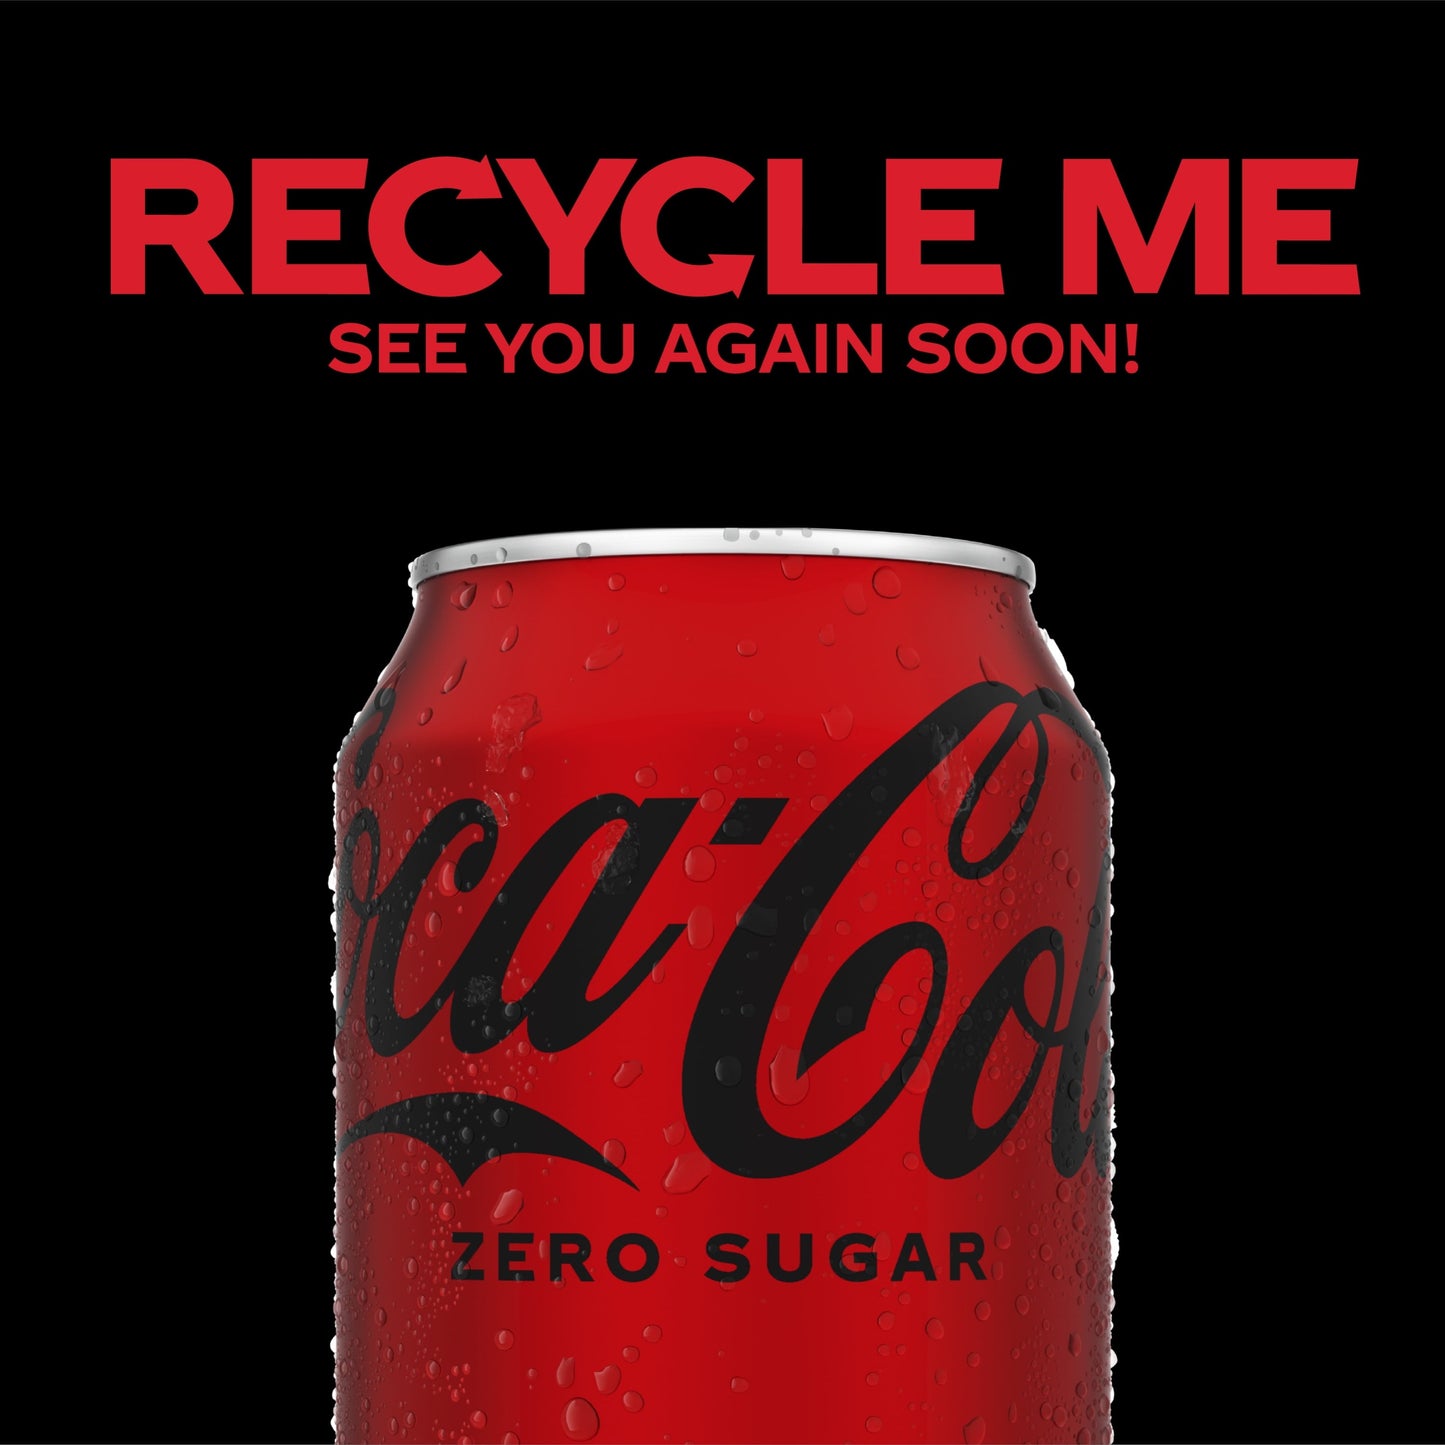 Coca-Cola Zero Sugar Soda Pop, 12 fl oz, 24 Pack Cans